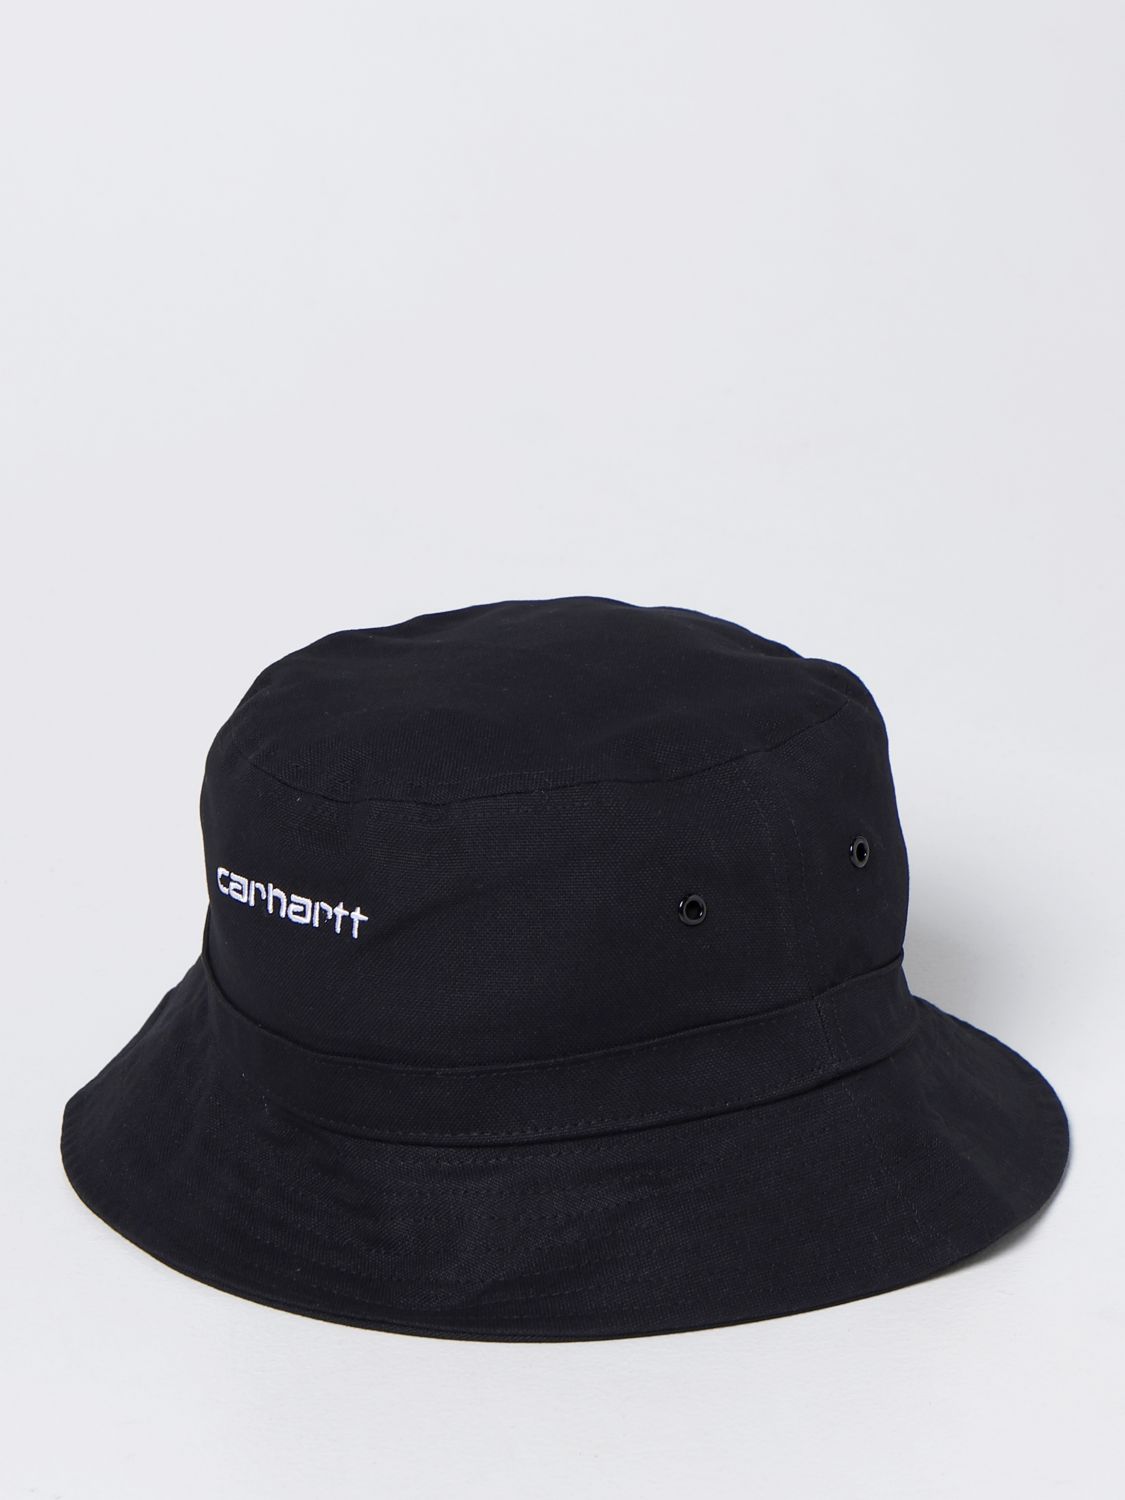 CARHARTT WIP: Carhartt fisherman hat in cotton - Black | Carhartt Wip ...